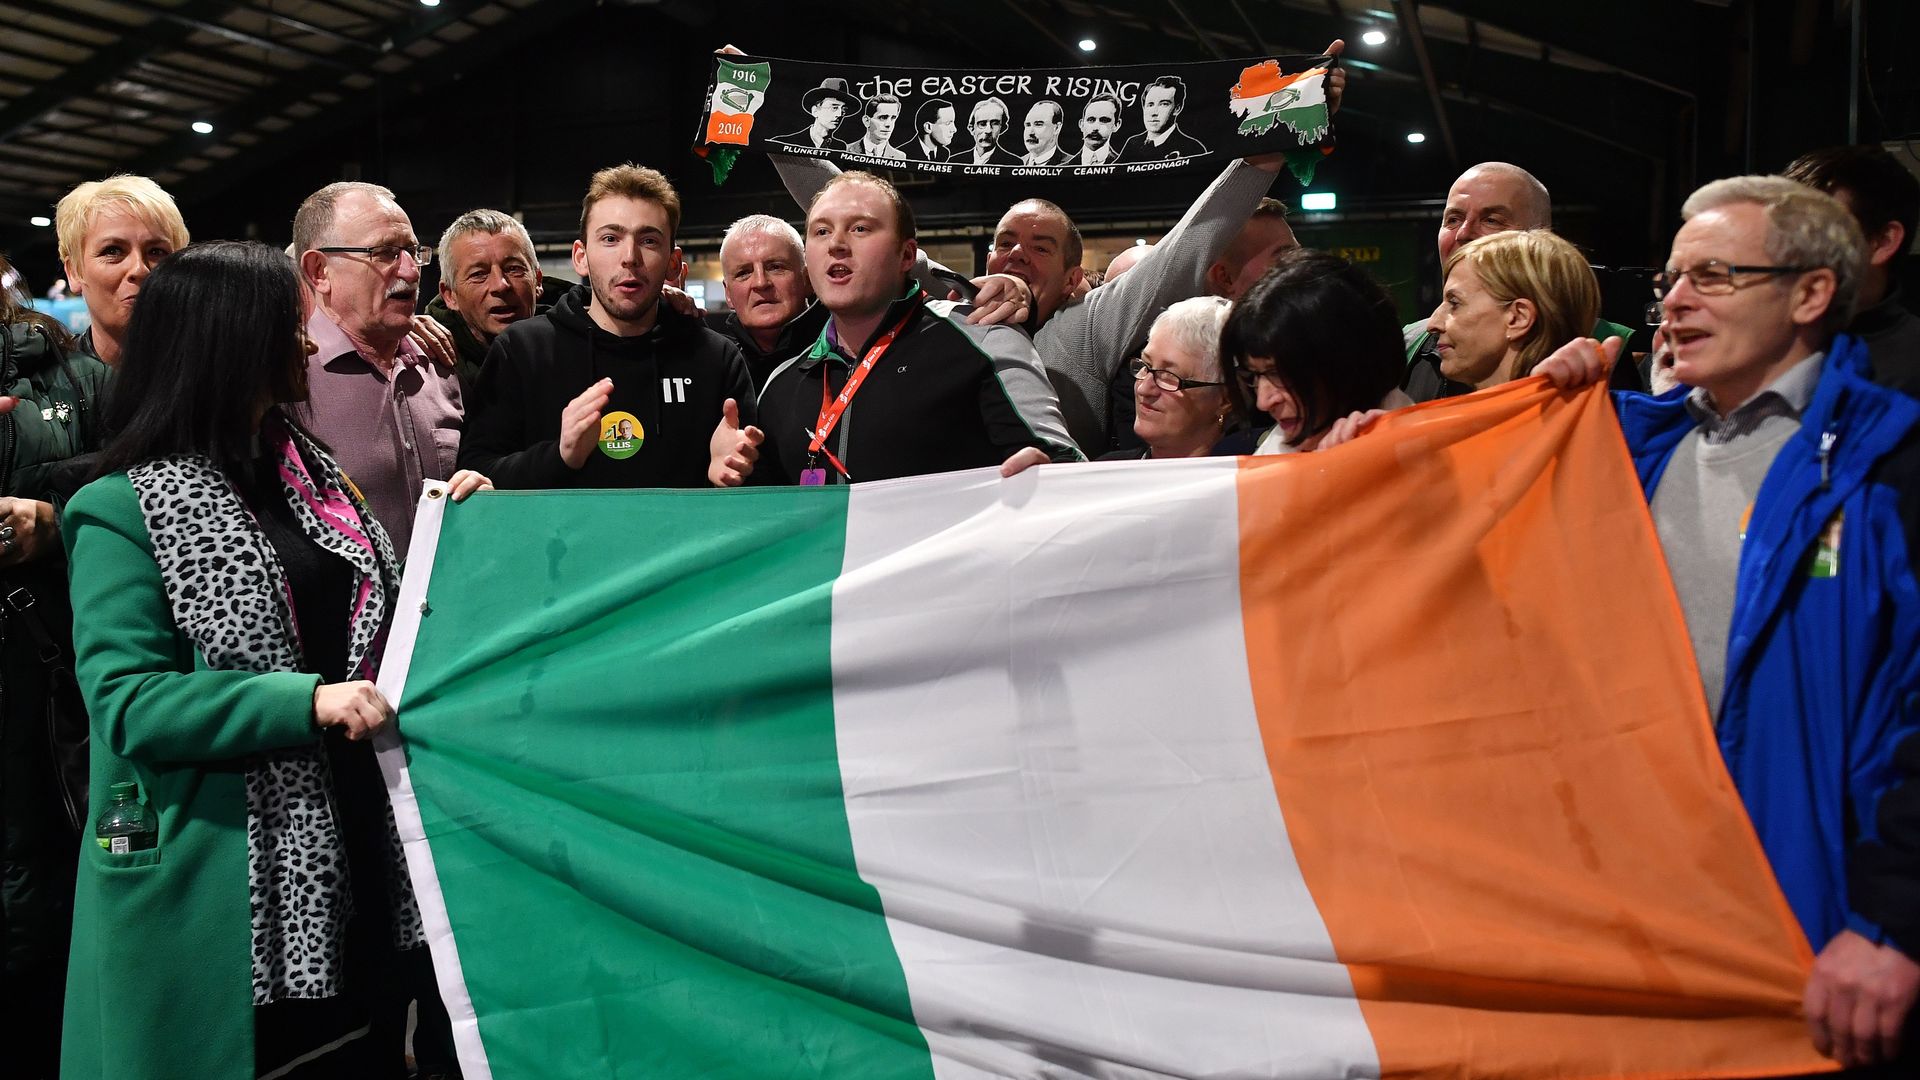 Sinn Fein party supporters hold the Irish flag in Dublin on Feb. 9, 2020